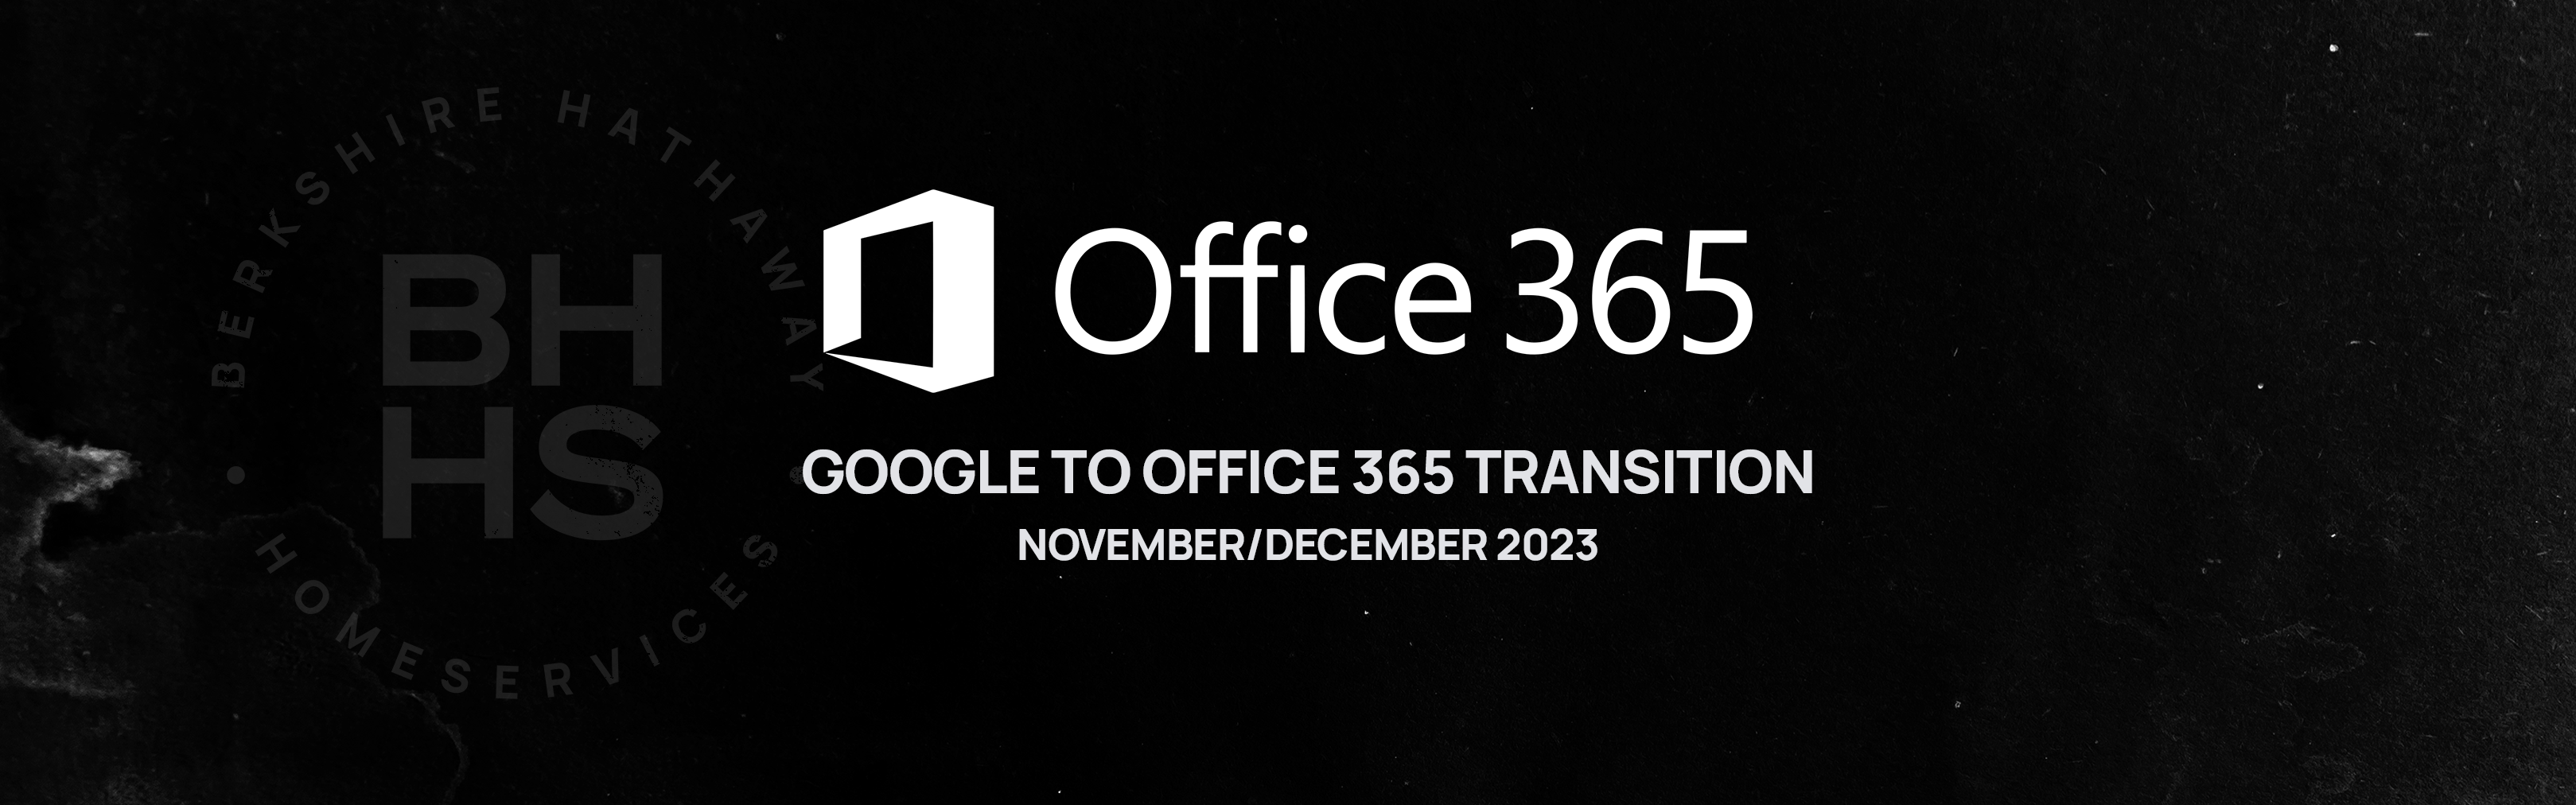 google to office 365 transition header